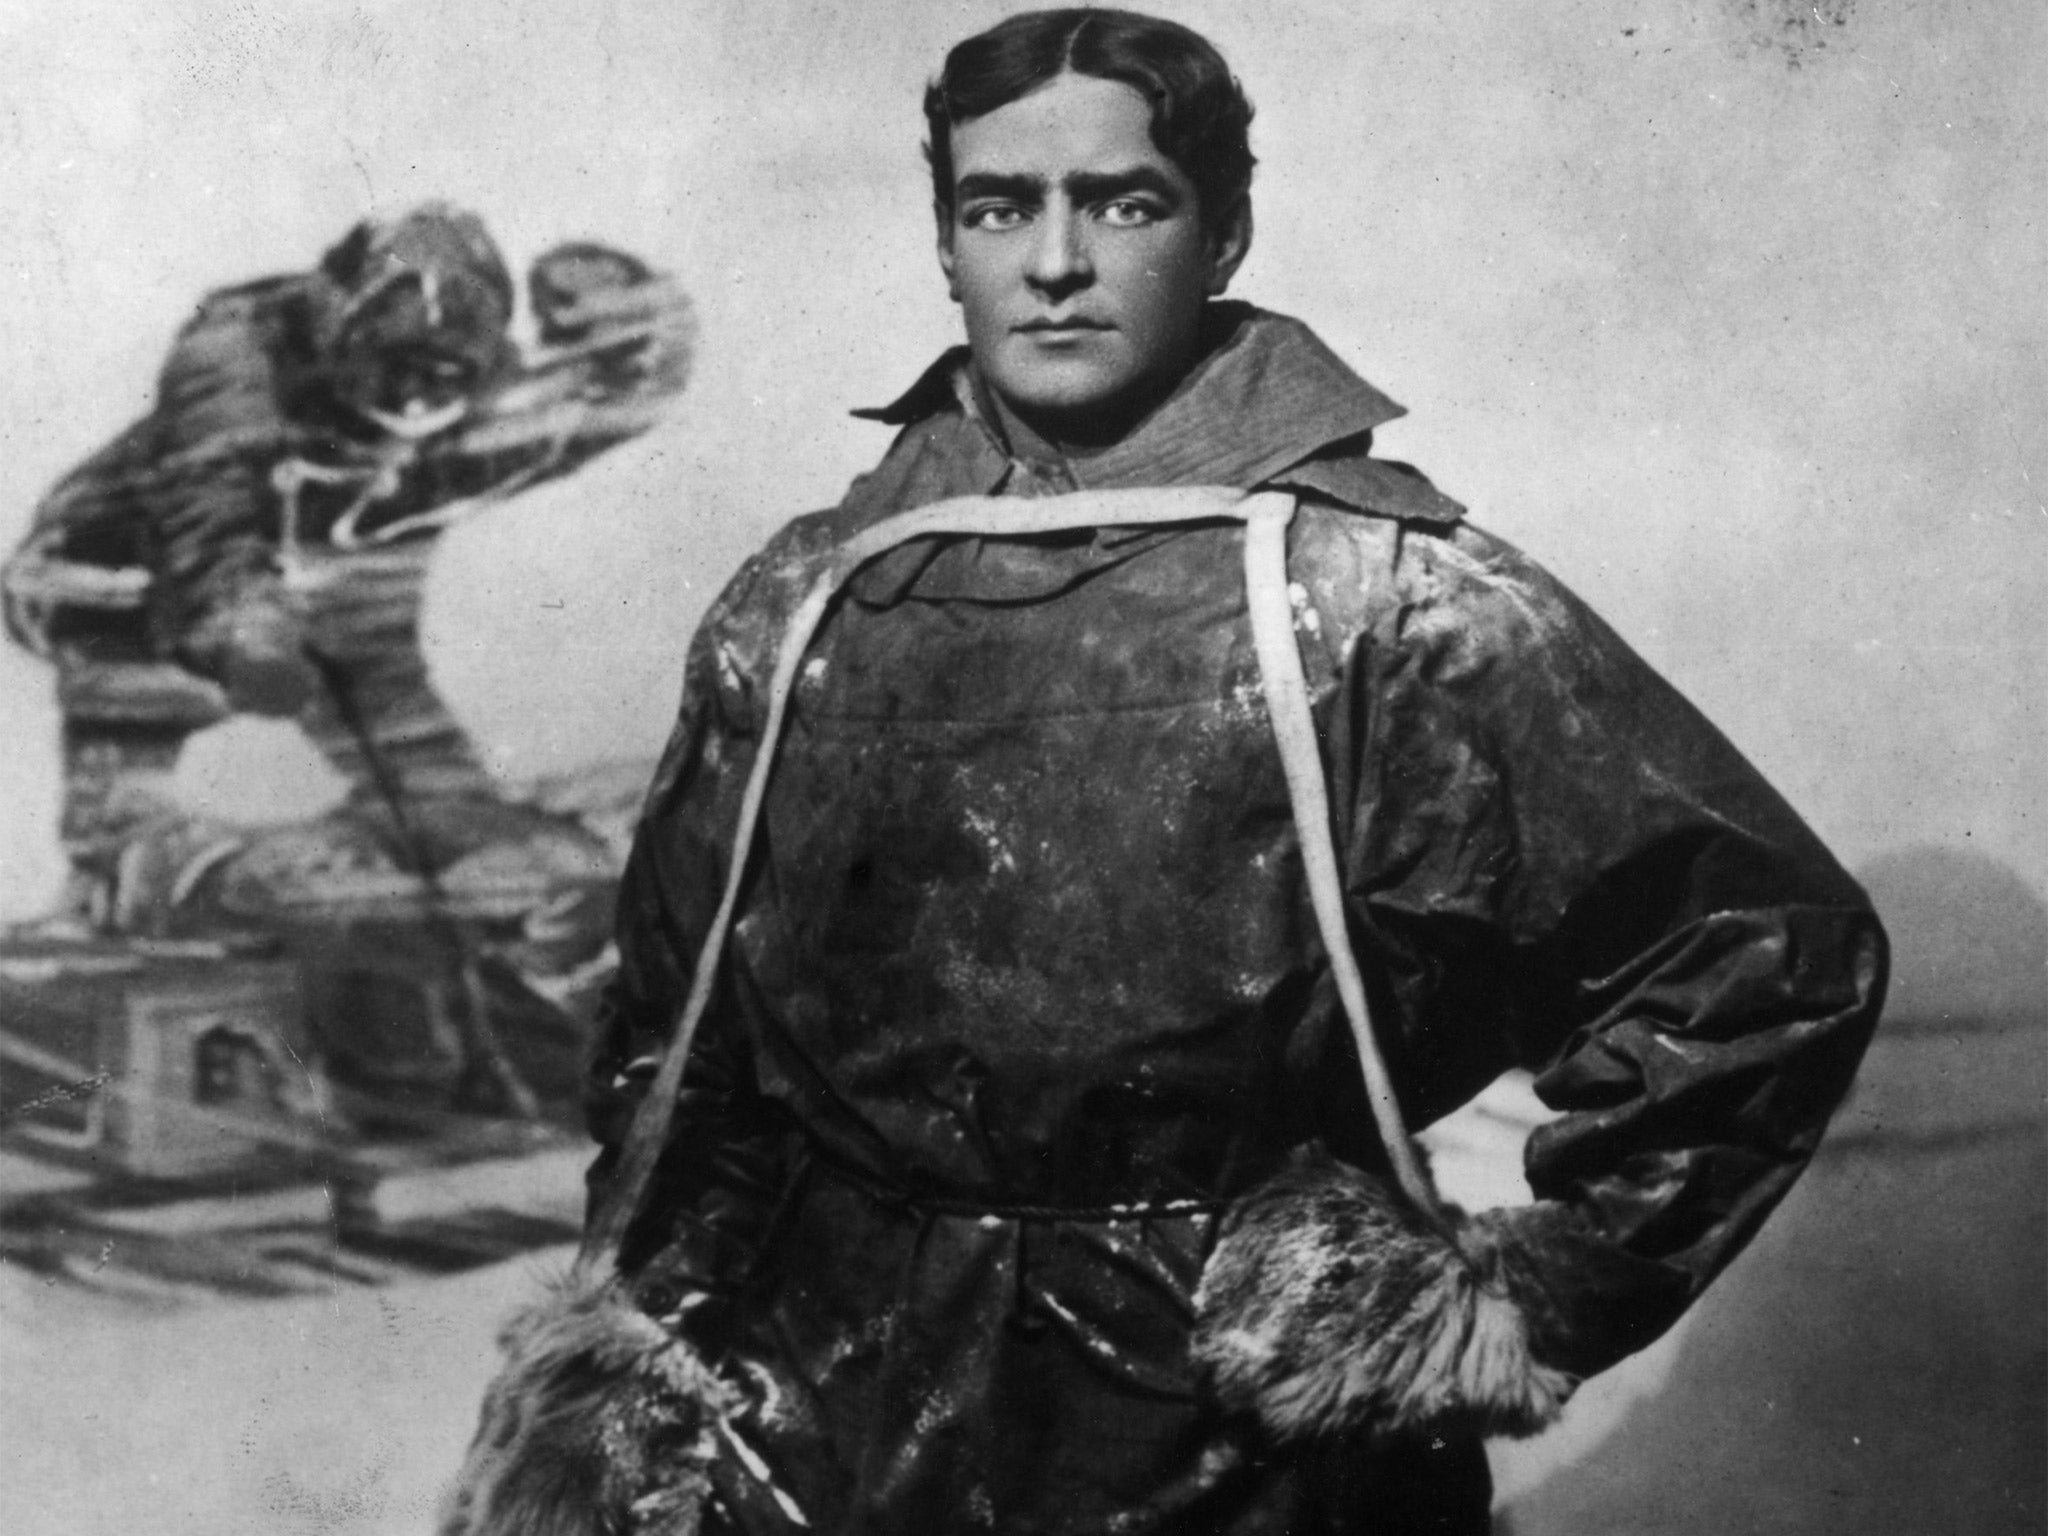 Irish Antarctic explorer Sir Ernest Shackleton in 1908